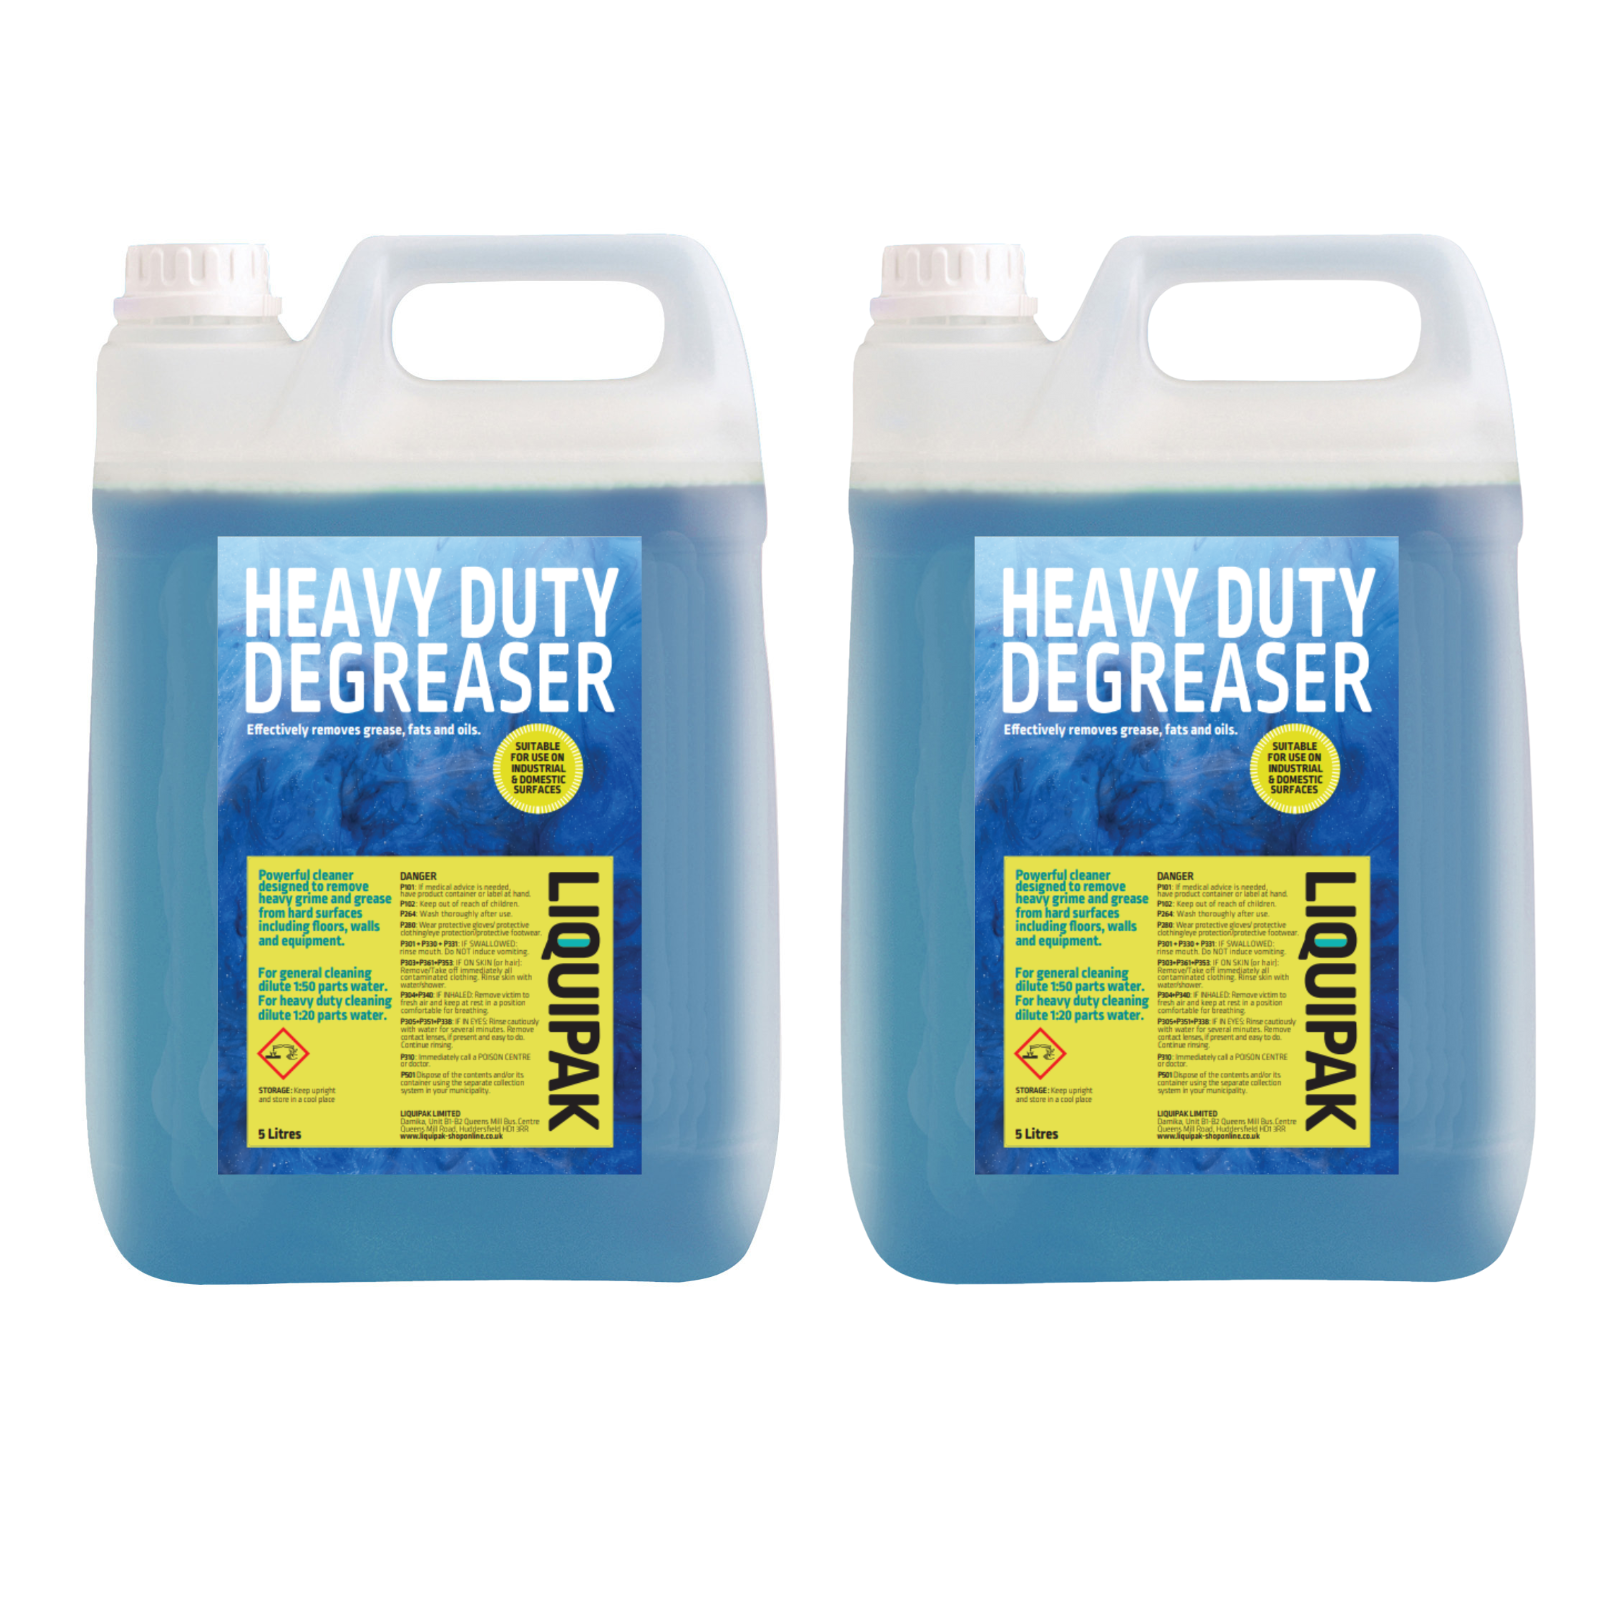 Heavy duty degreaser 2x5L | Liquipak Promo of the Week